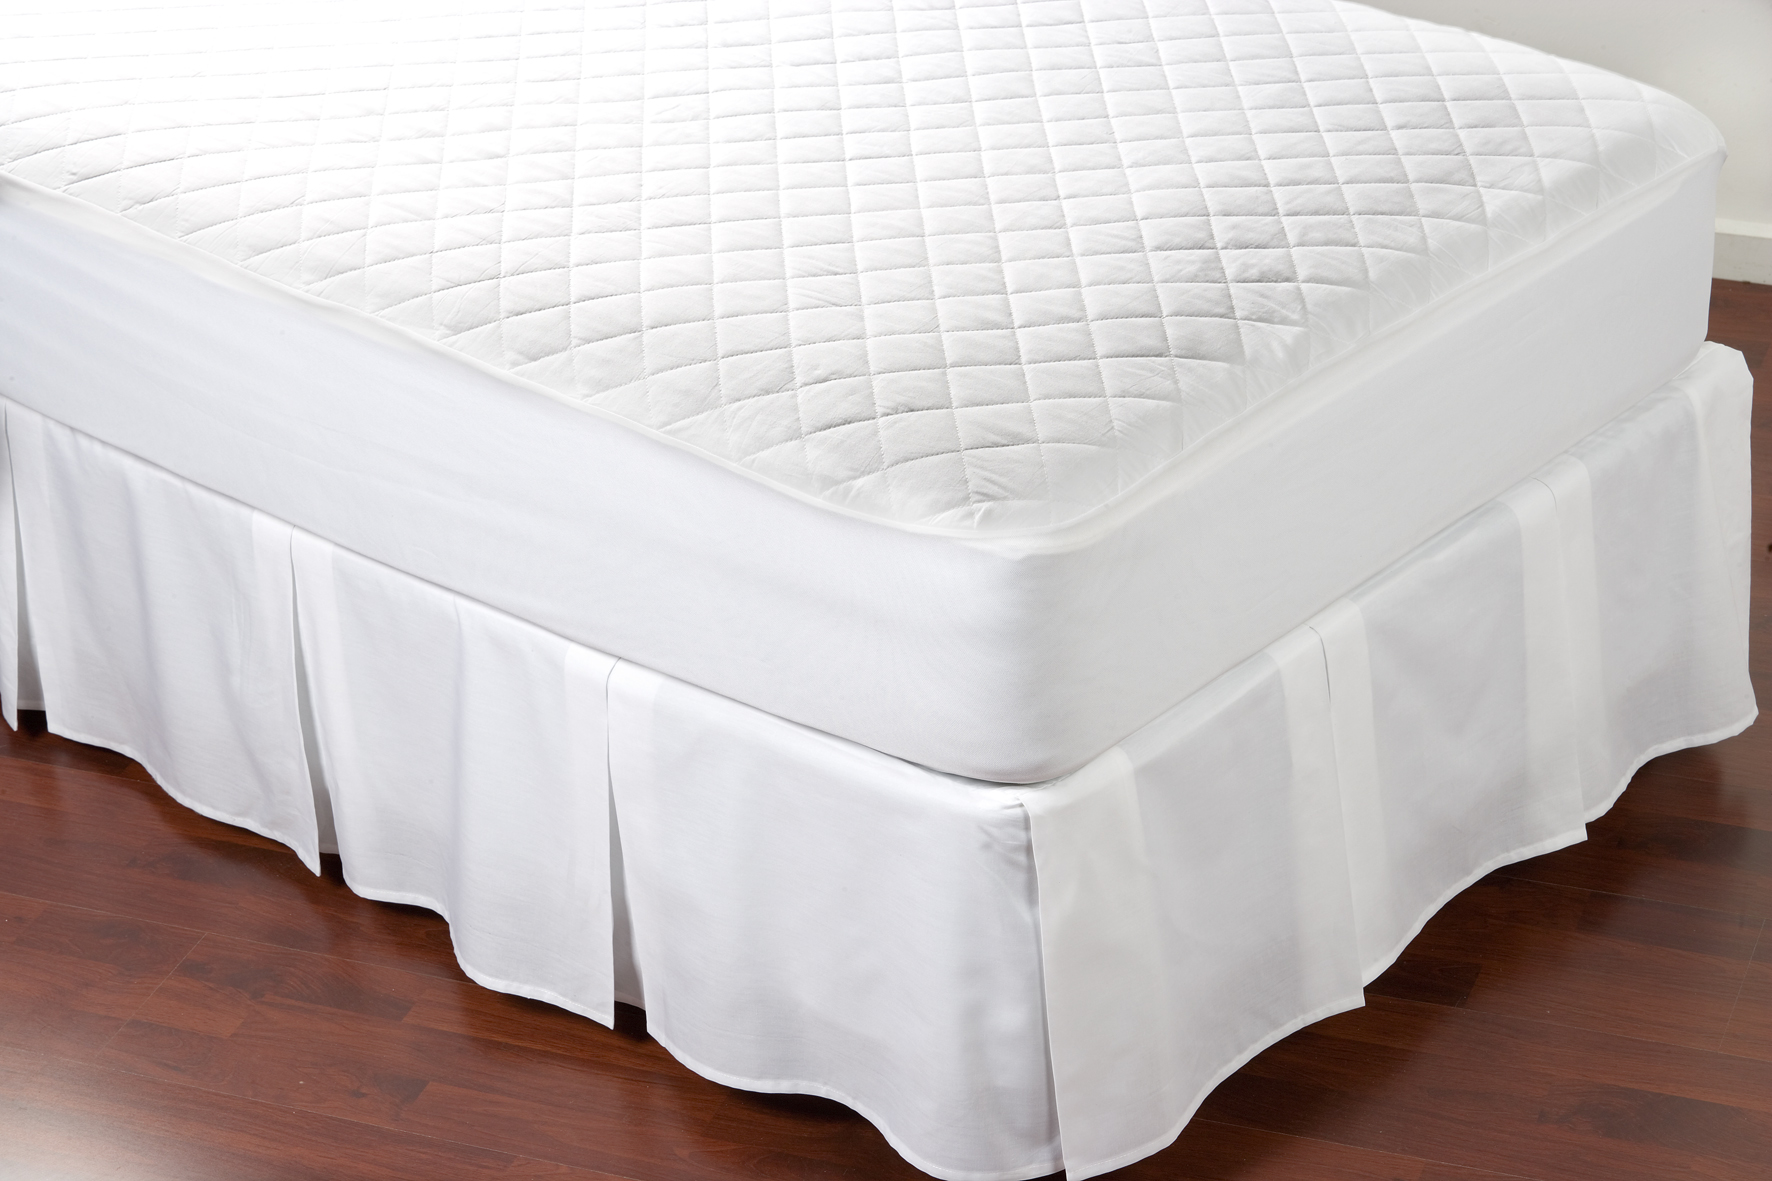 73 x 35 mattress protector